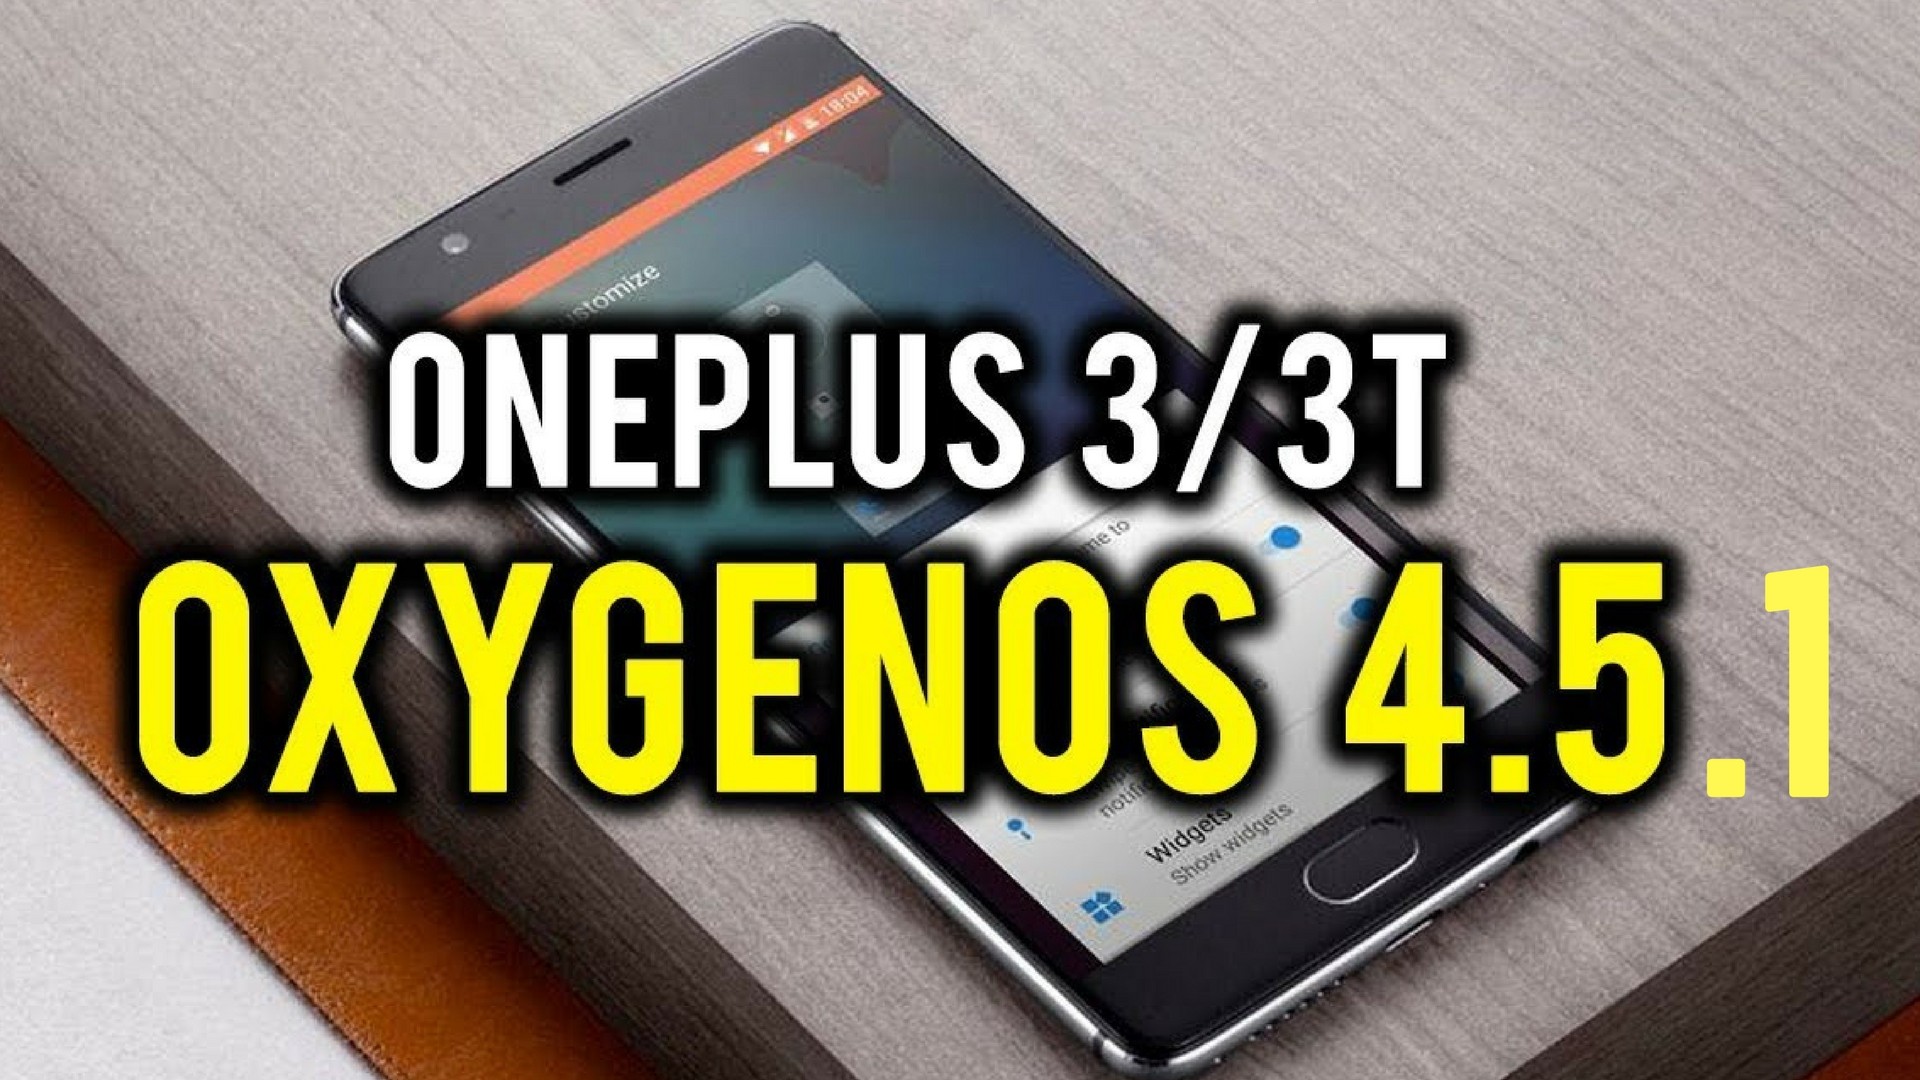 OxygenOs 4.1.5 disponible para OnePlus 3 y OnePlus 3T.